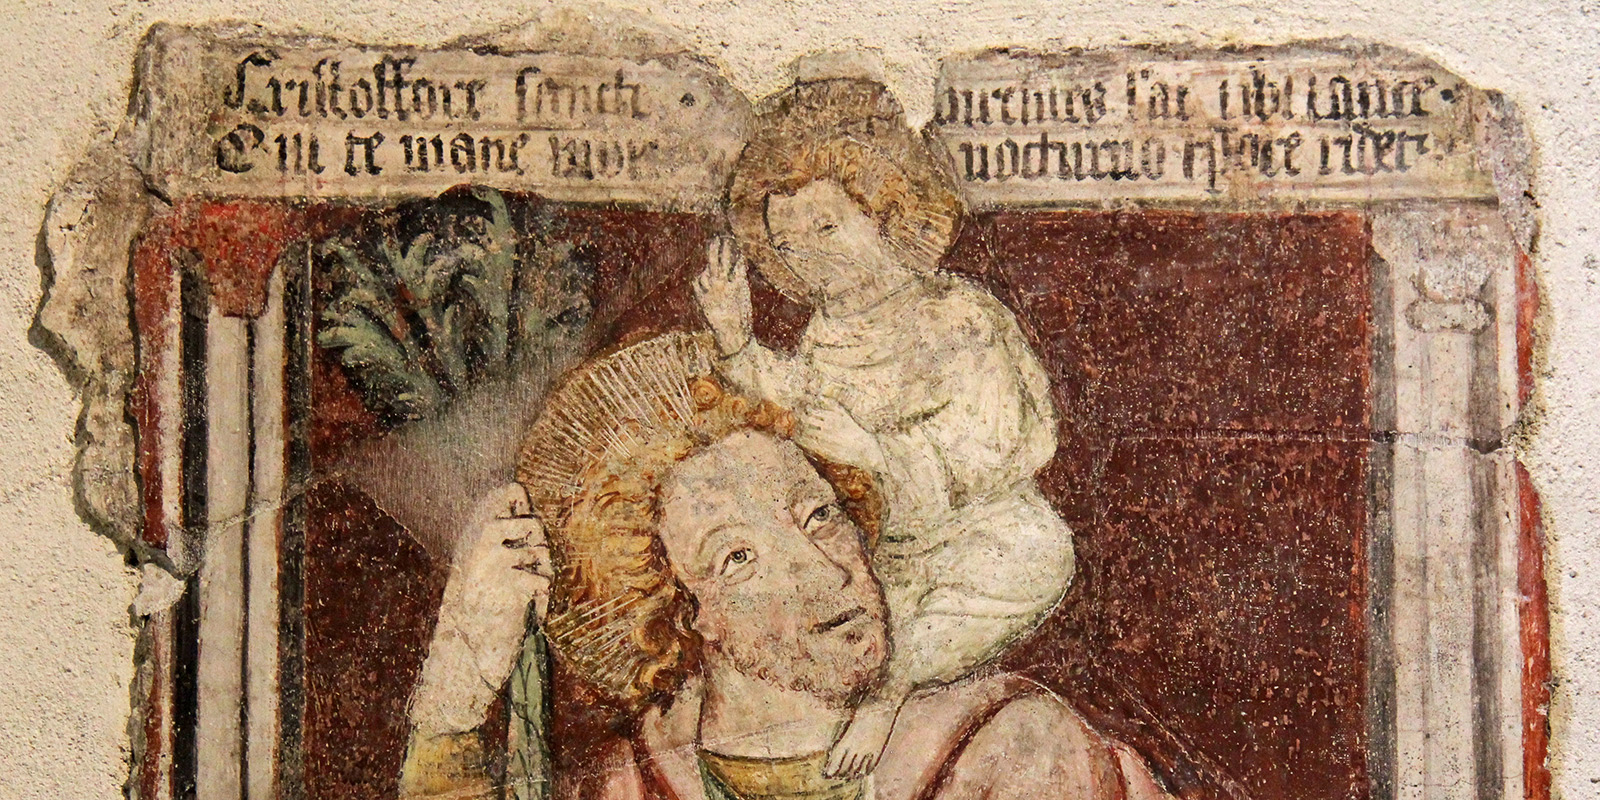 St Christopher in a fresco from Termeno, Italy (Gabriffaldi/Adobe)